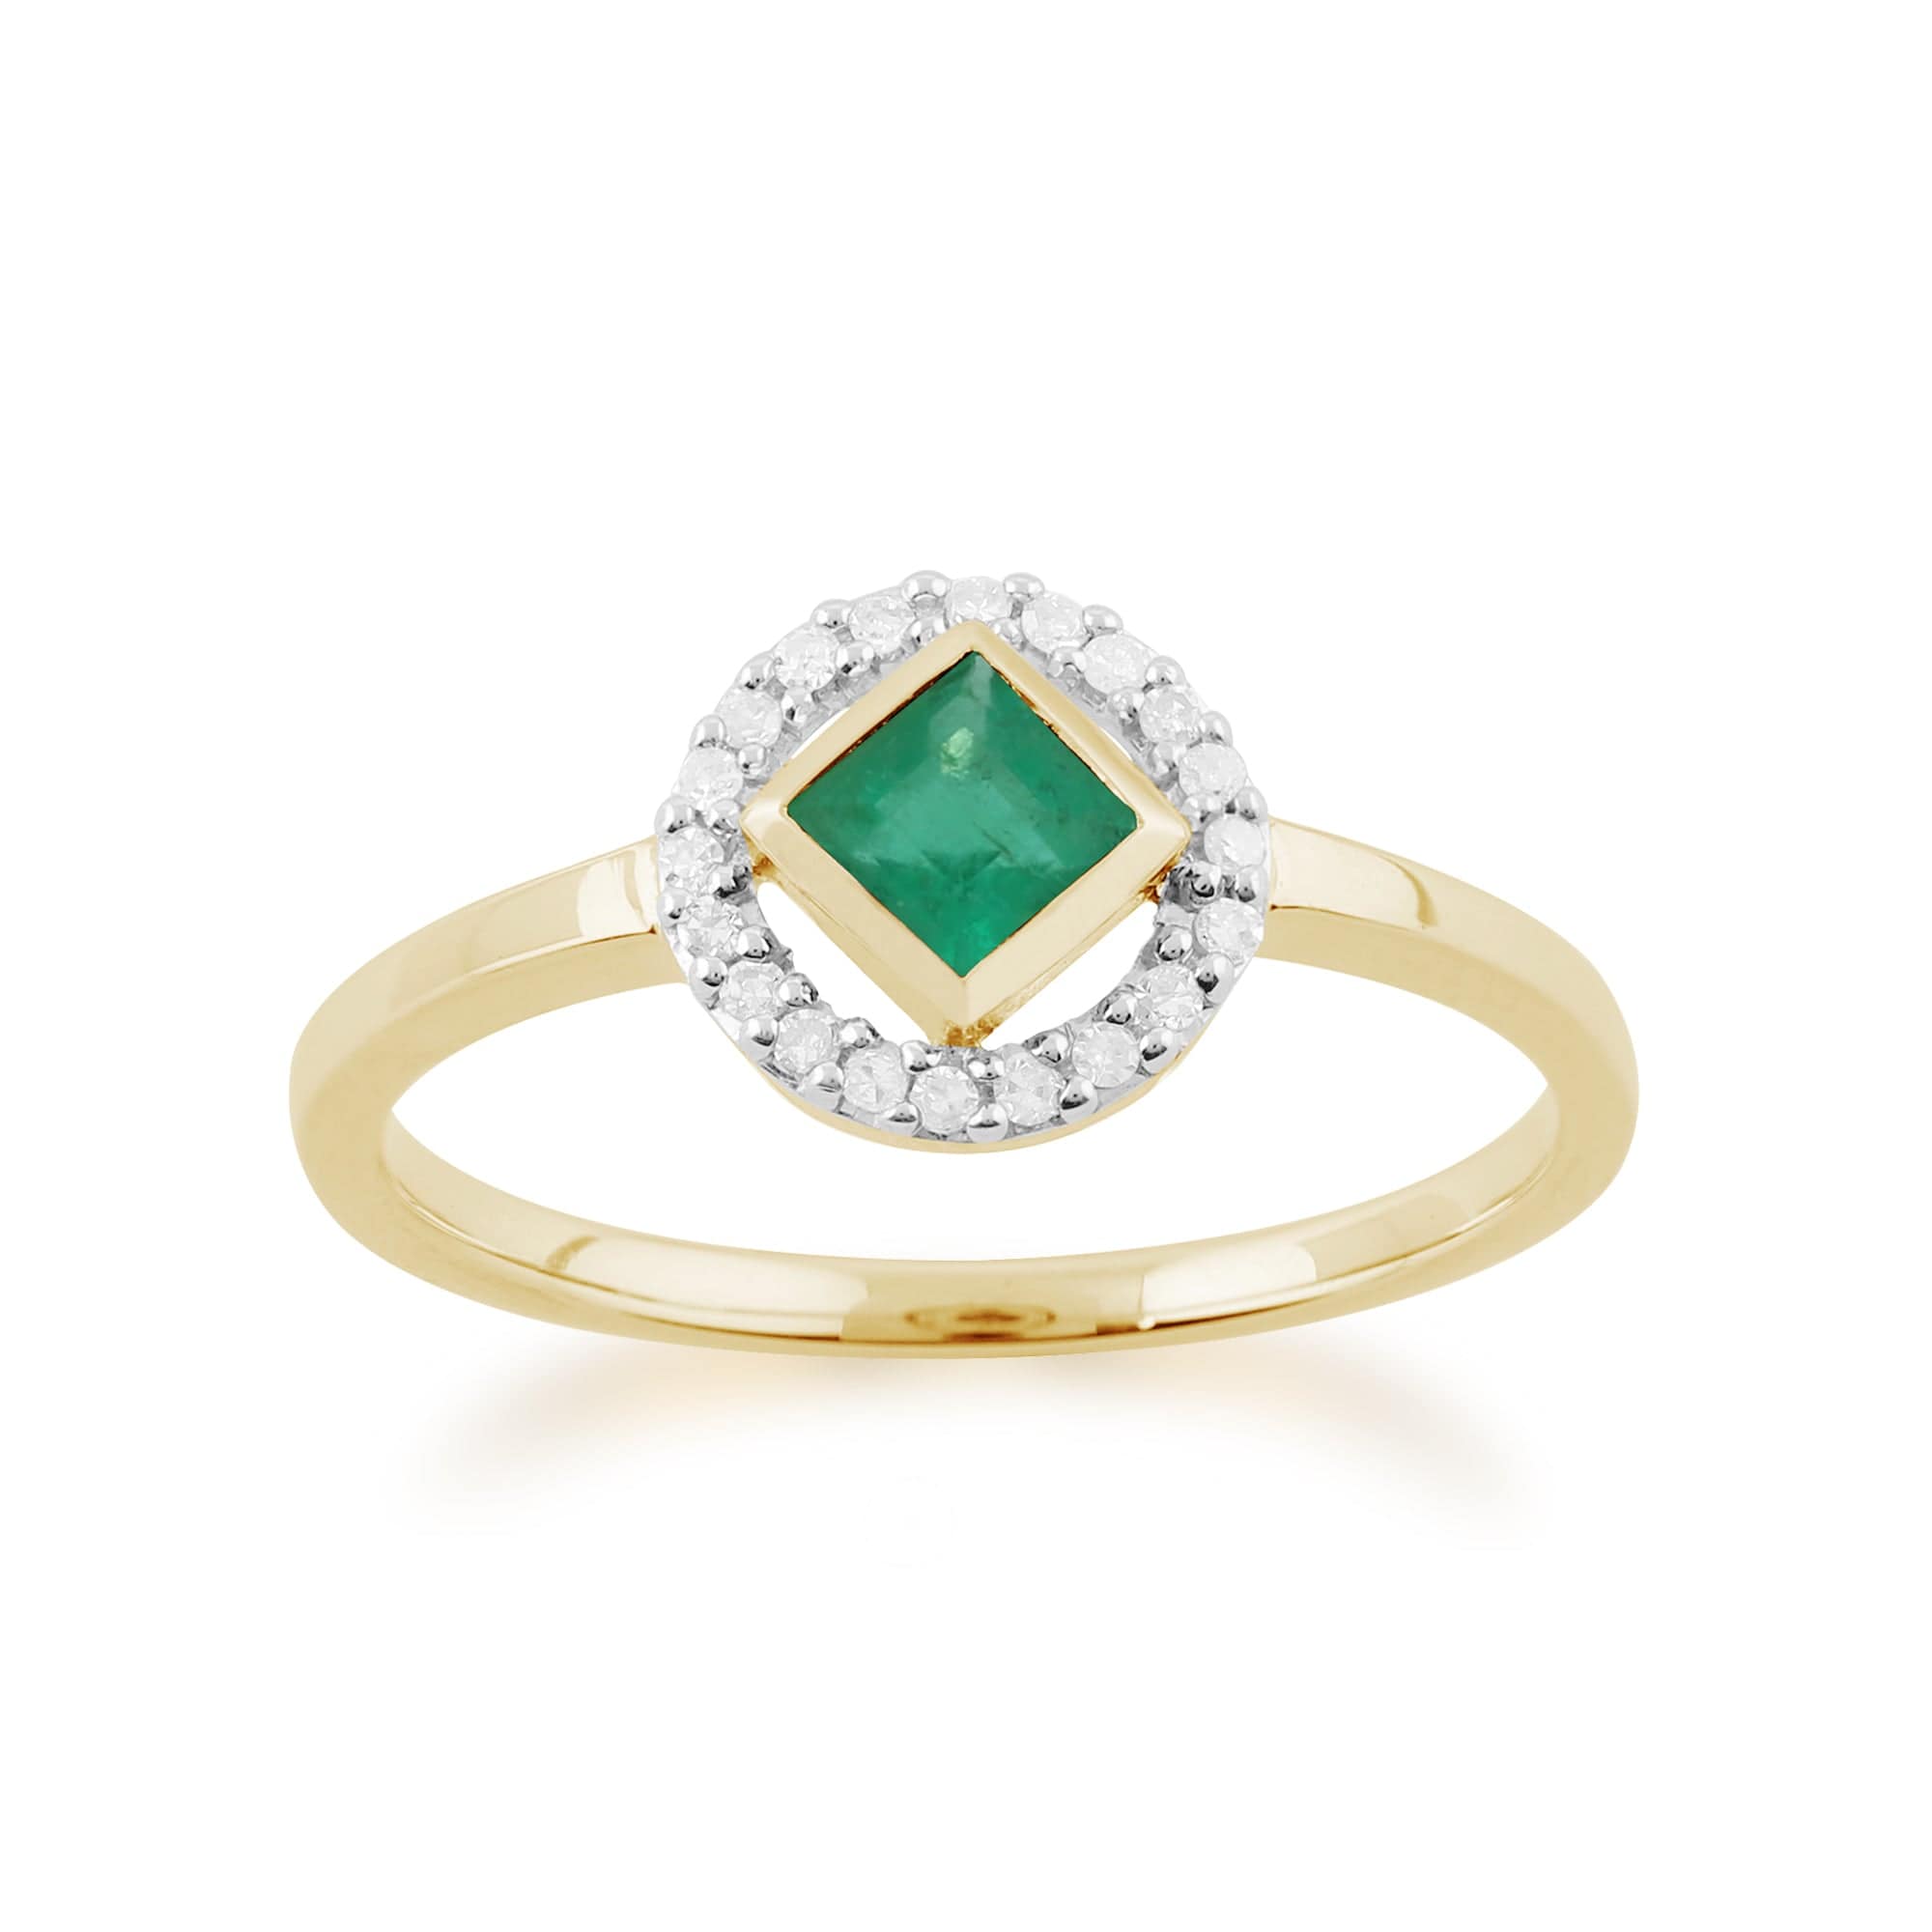 Gemondo 9ct Yellow Gold 0.27ct Emerald & Diamond Ring Image 1